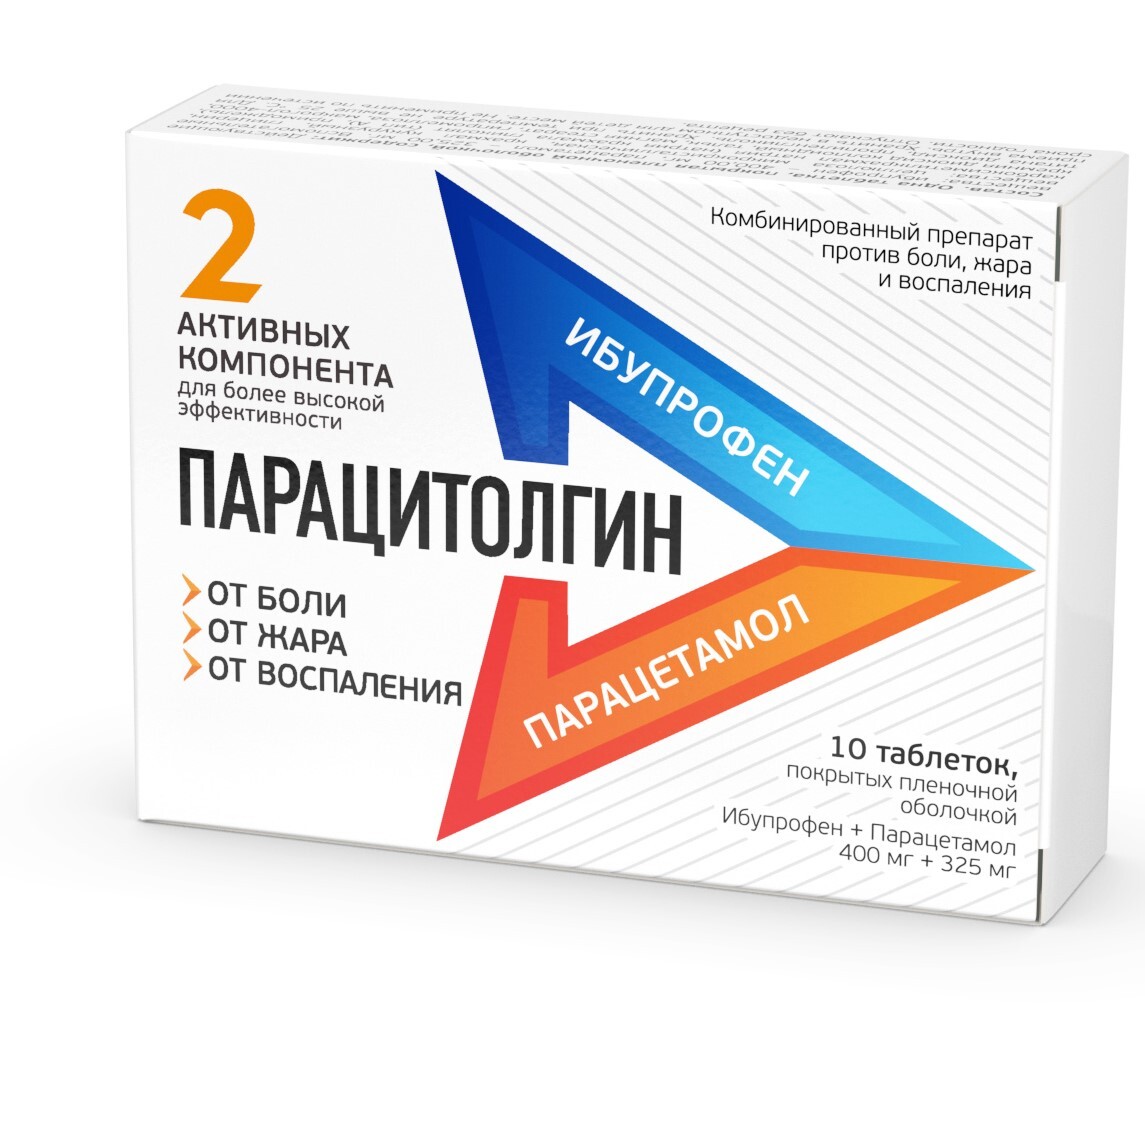 Парацитолгин 400 мг + 325 мг, 10 таблеток —  в интернет-аптеке .